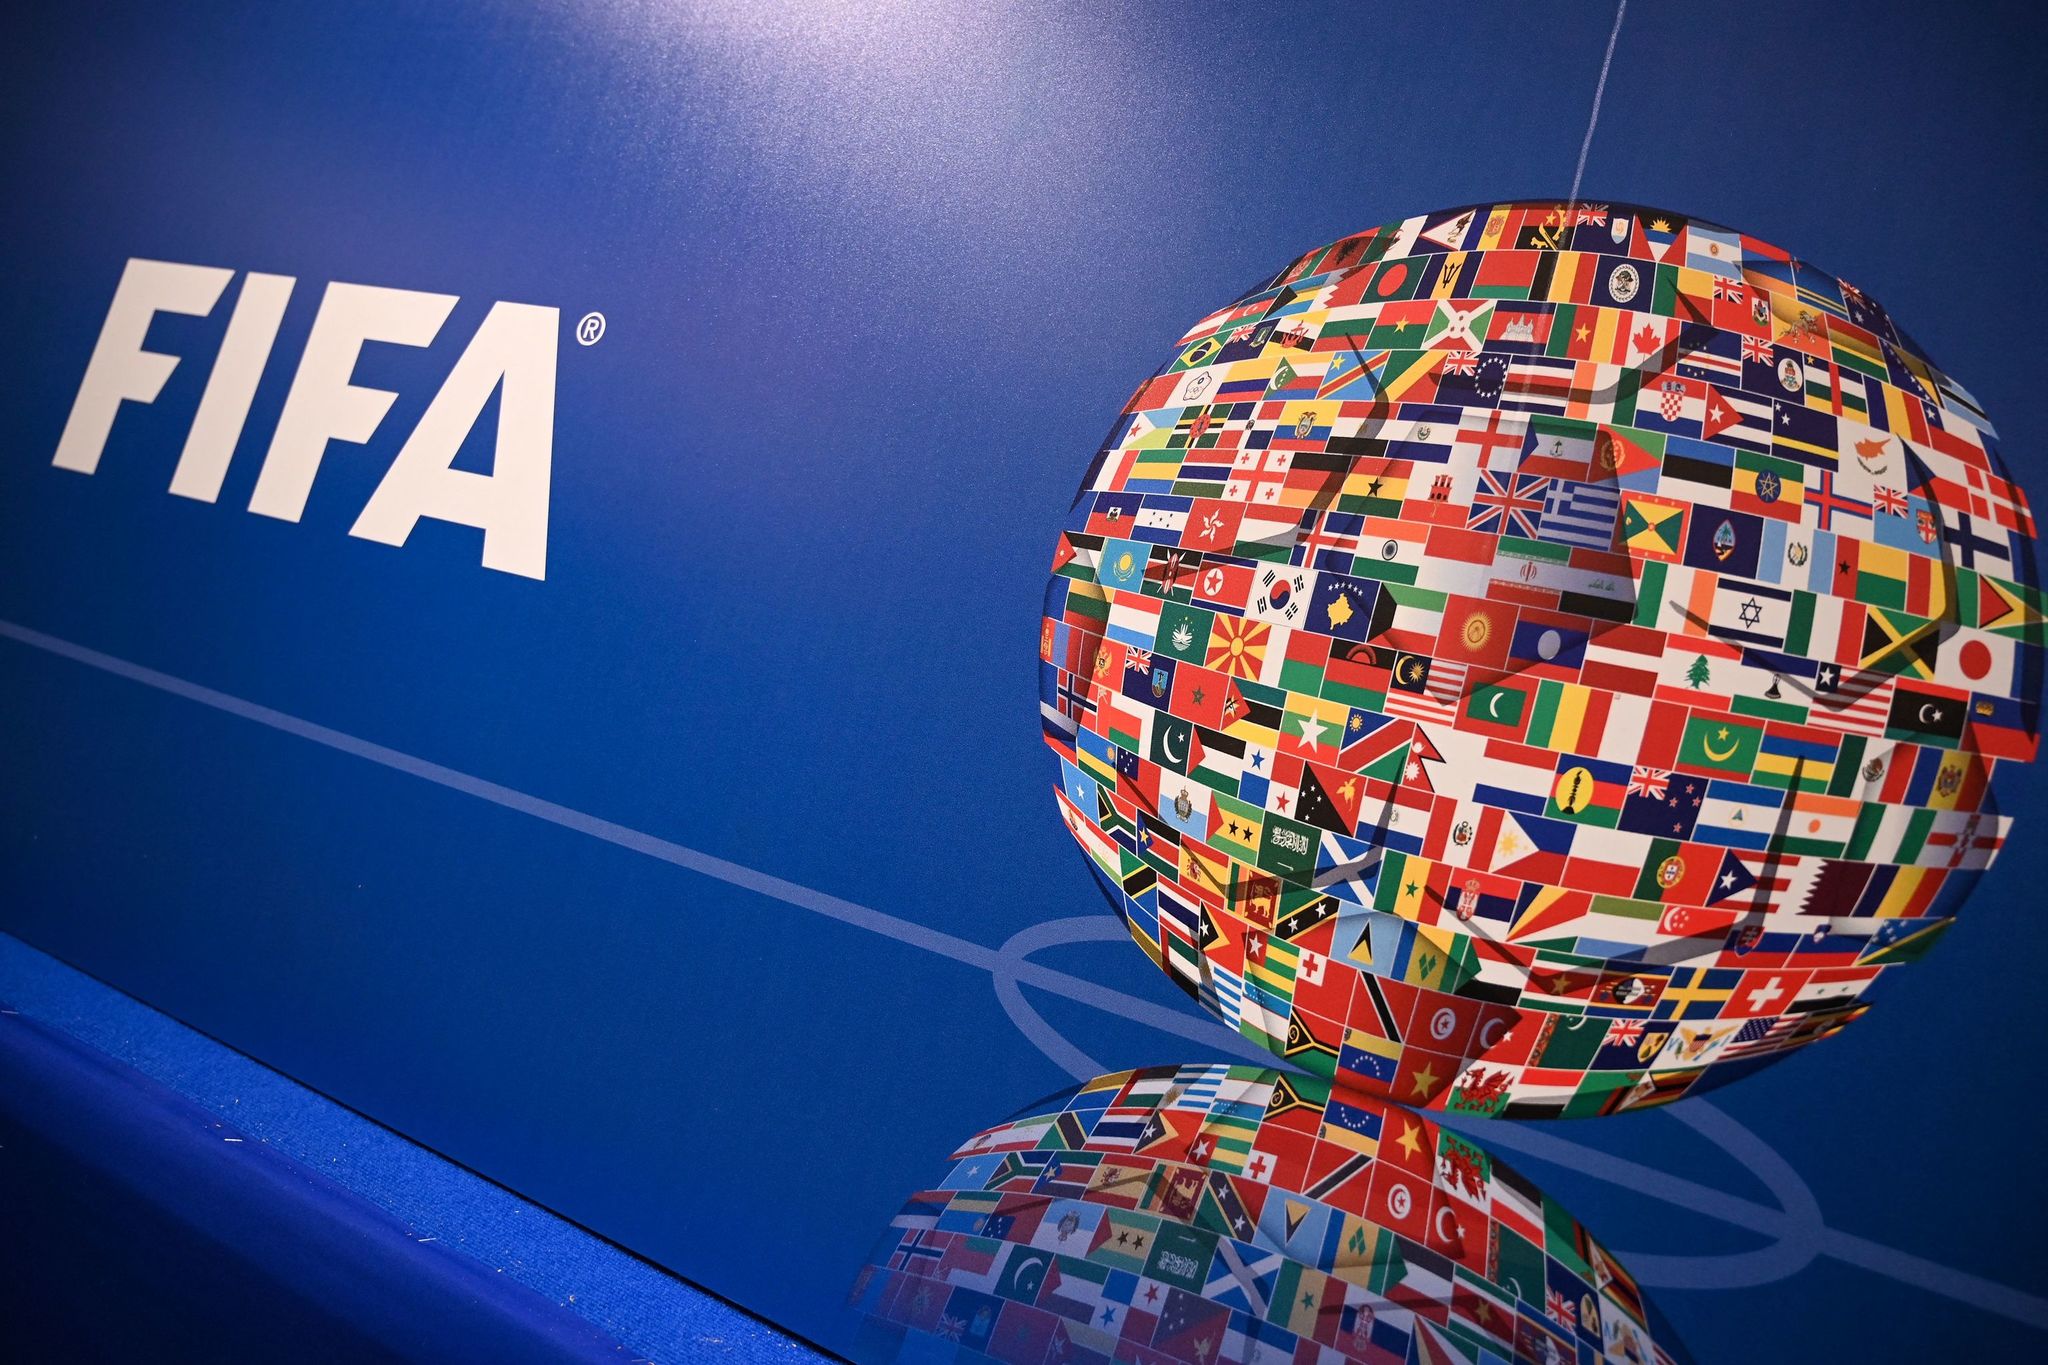 Una imagen promocional de la FIFA